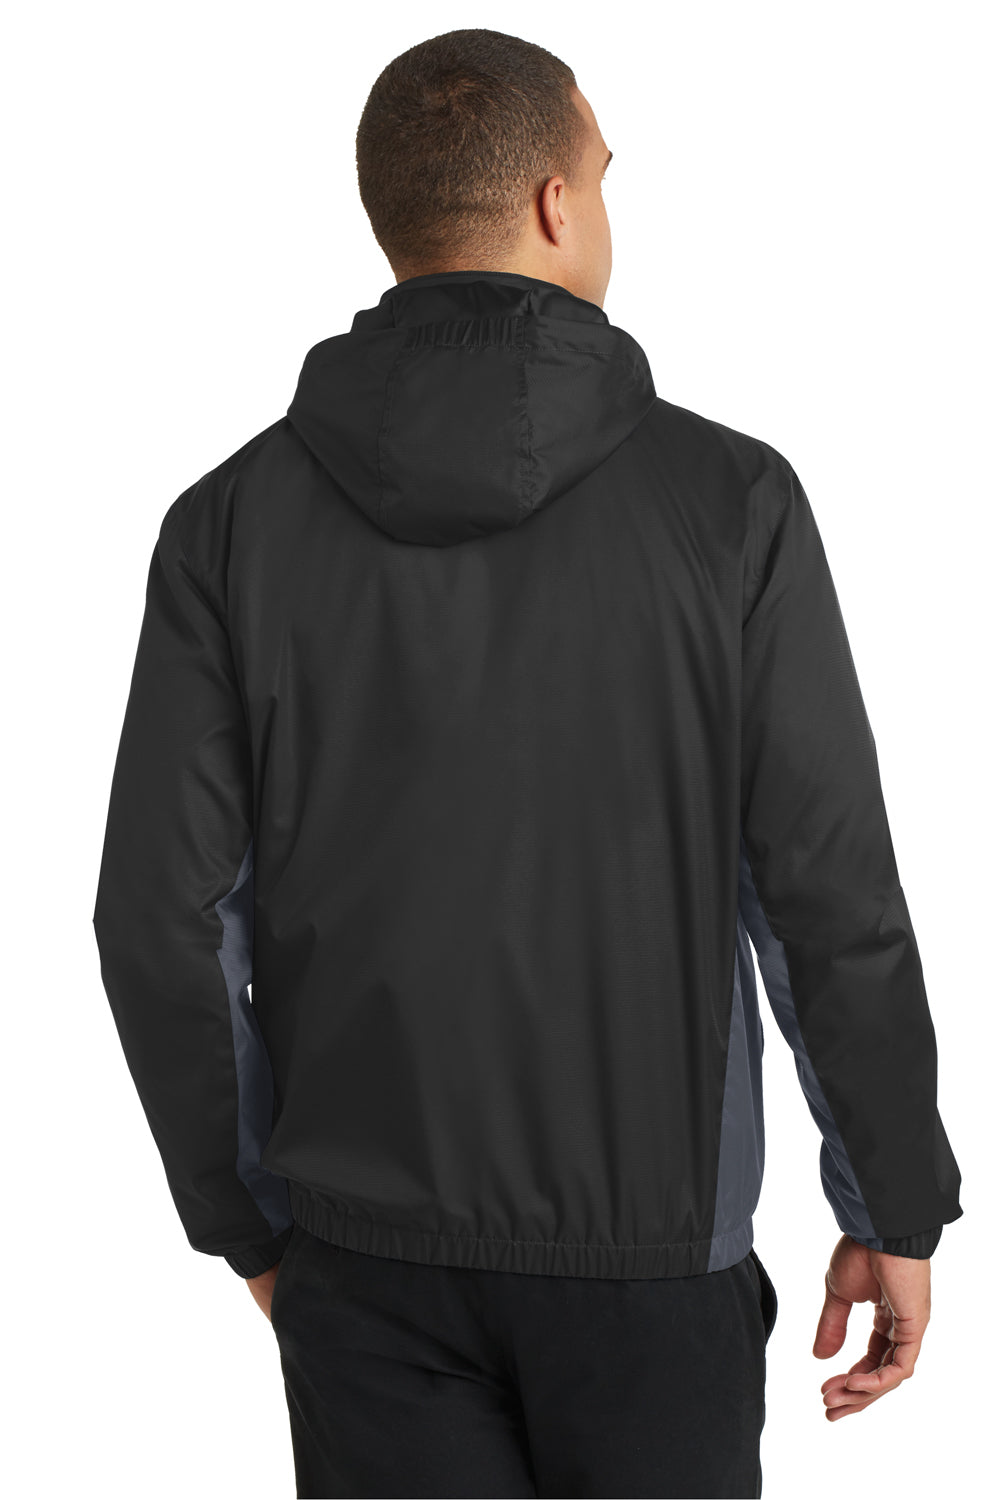 Port Authority J330 Mens Core Wind & Water Resistant Full Zip Jacket Black/Grey Back